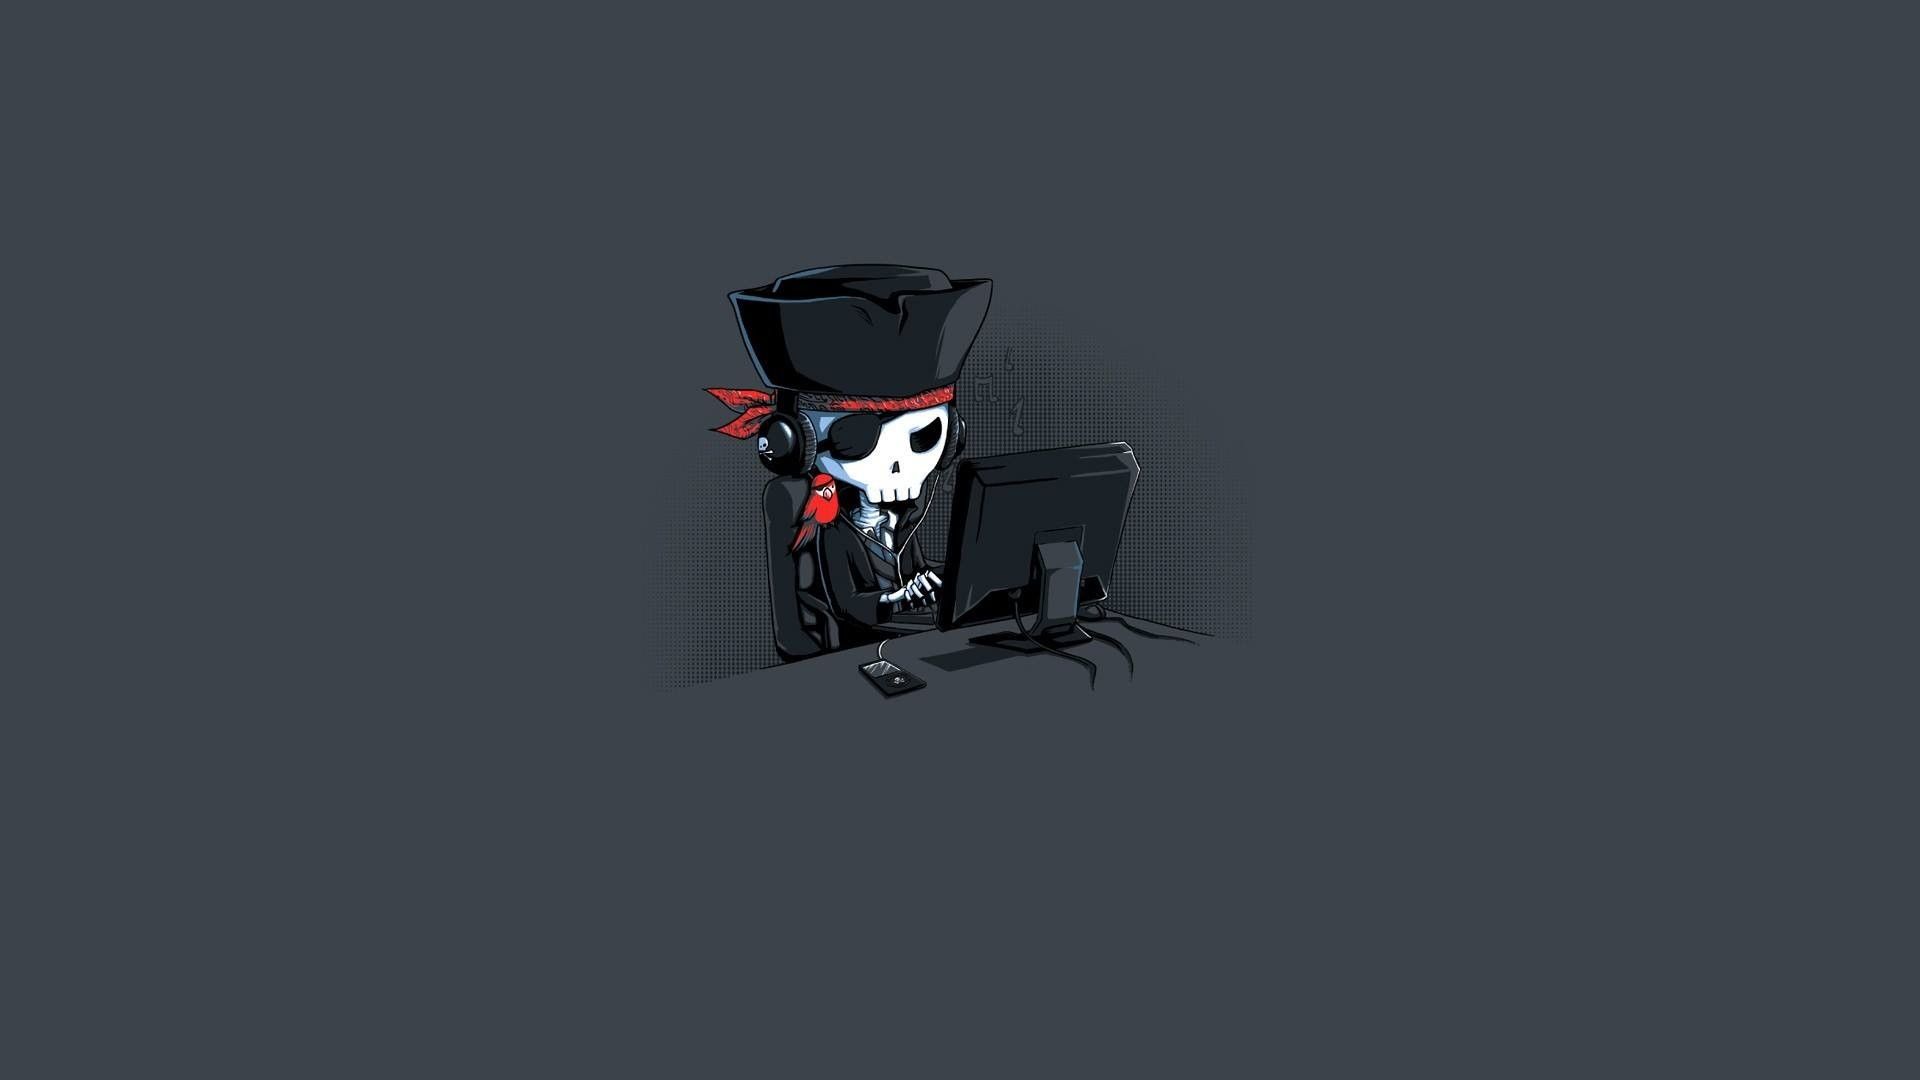 Pirate Hacker Minimalism, HD Artist, 4k Wallpapers, Image